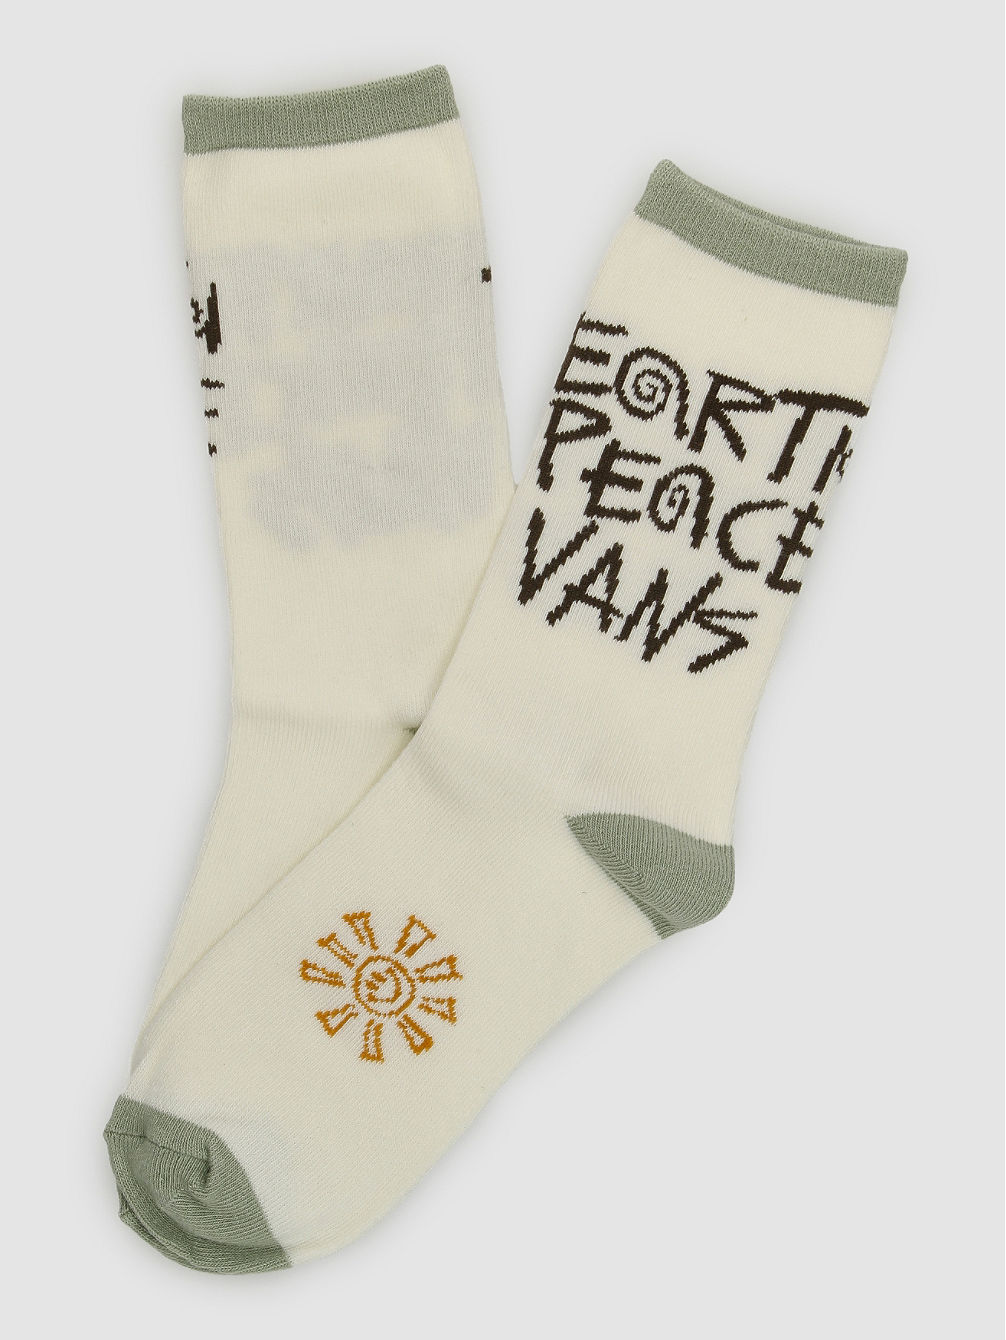 Earth Peace (6.5-10) Socken